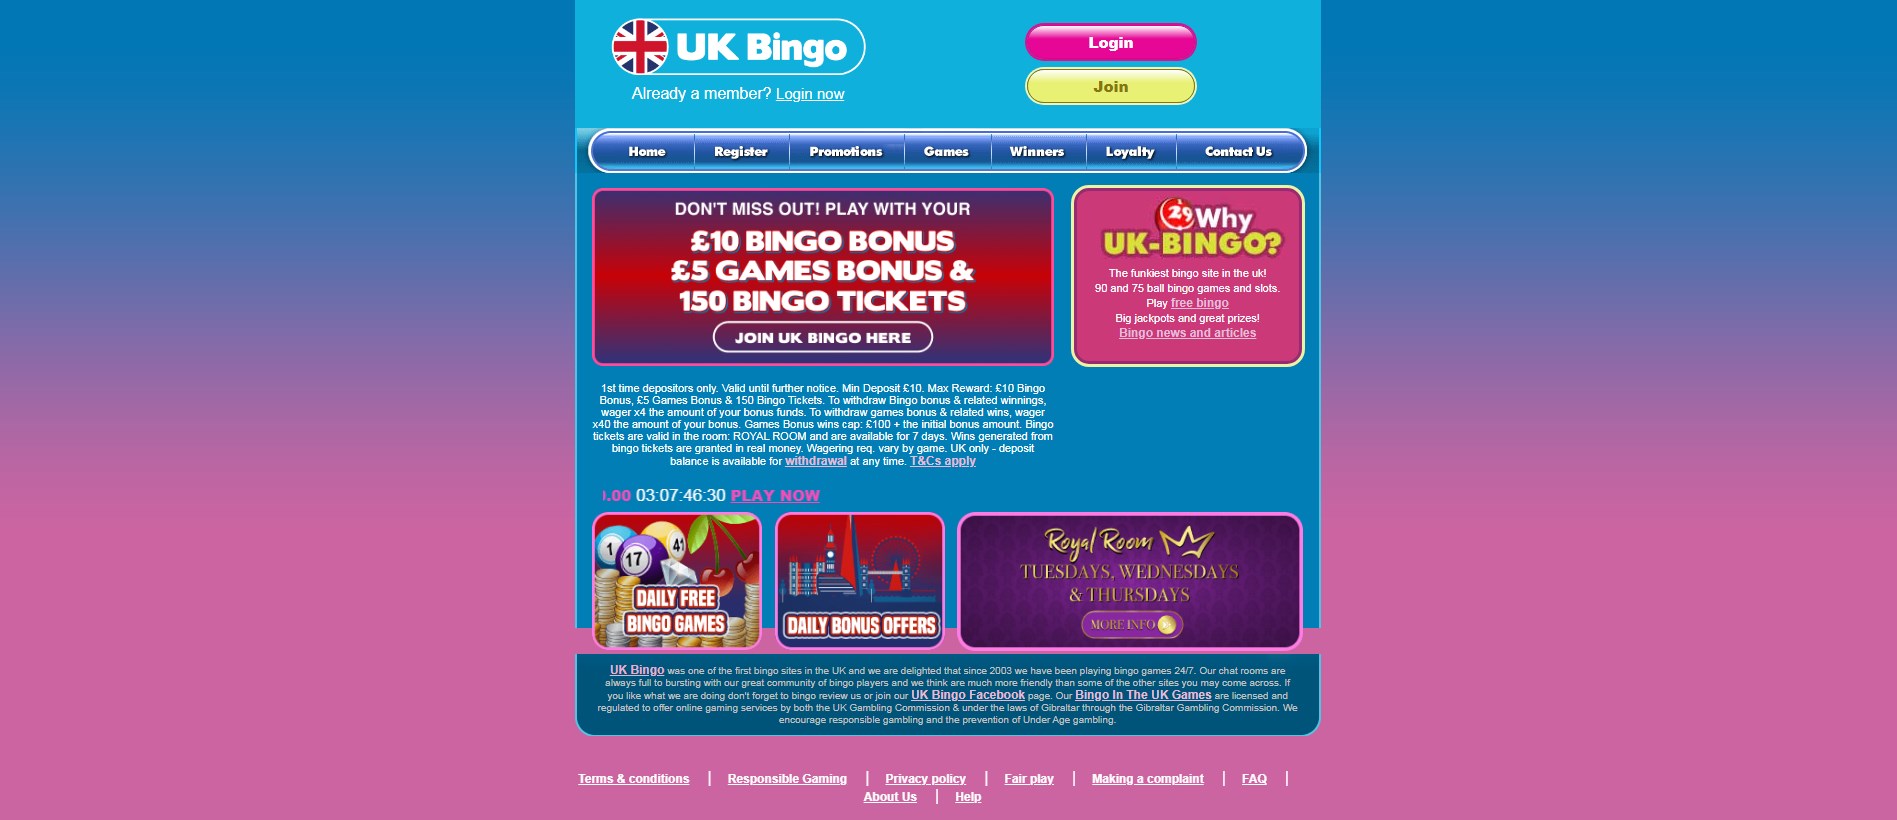 UK Bingo Casino Review